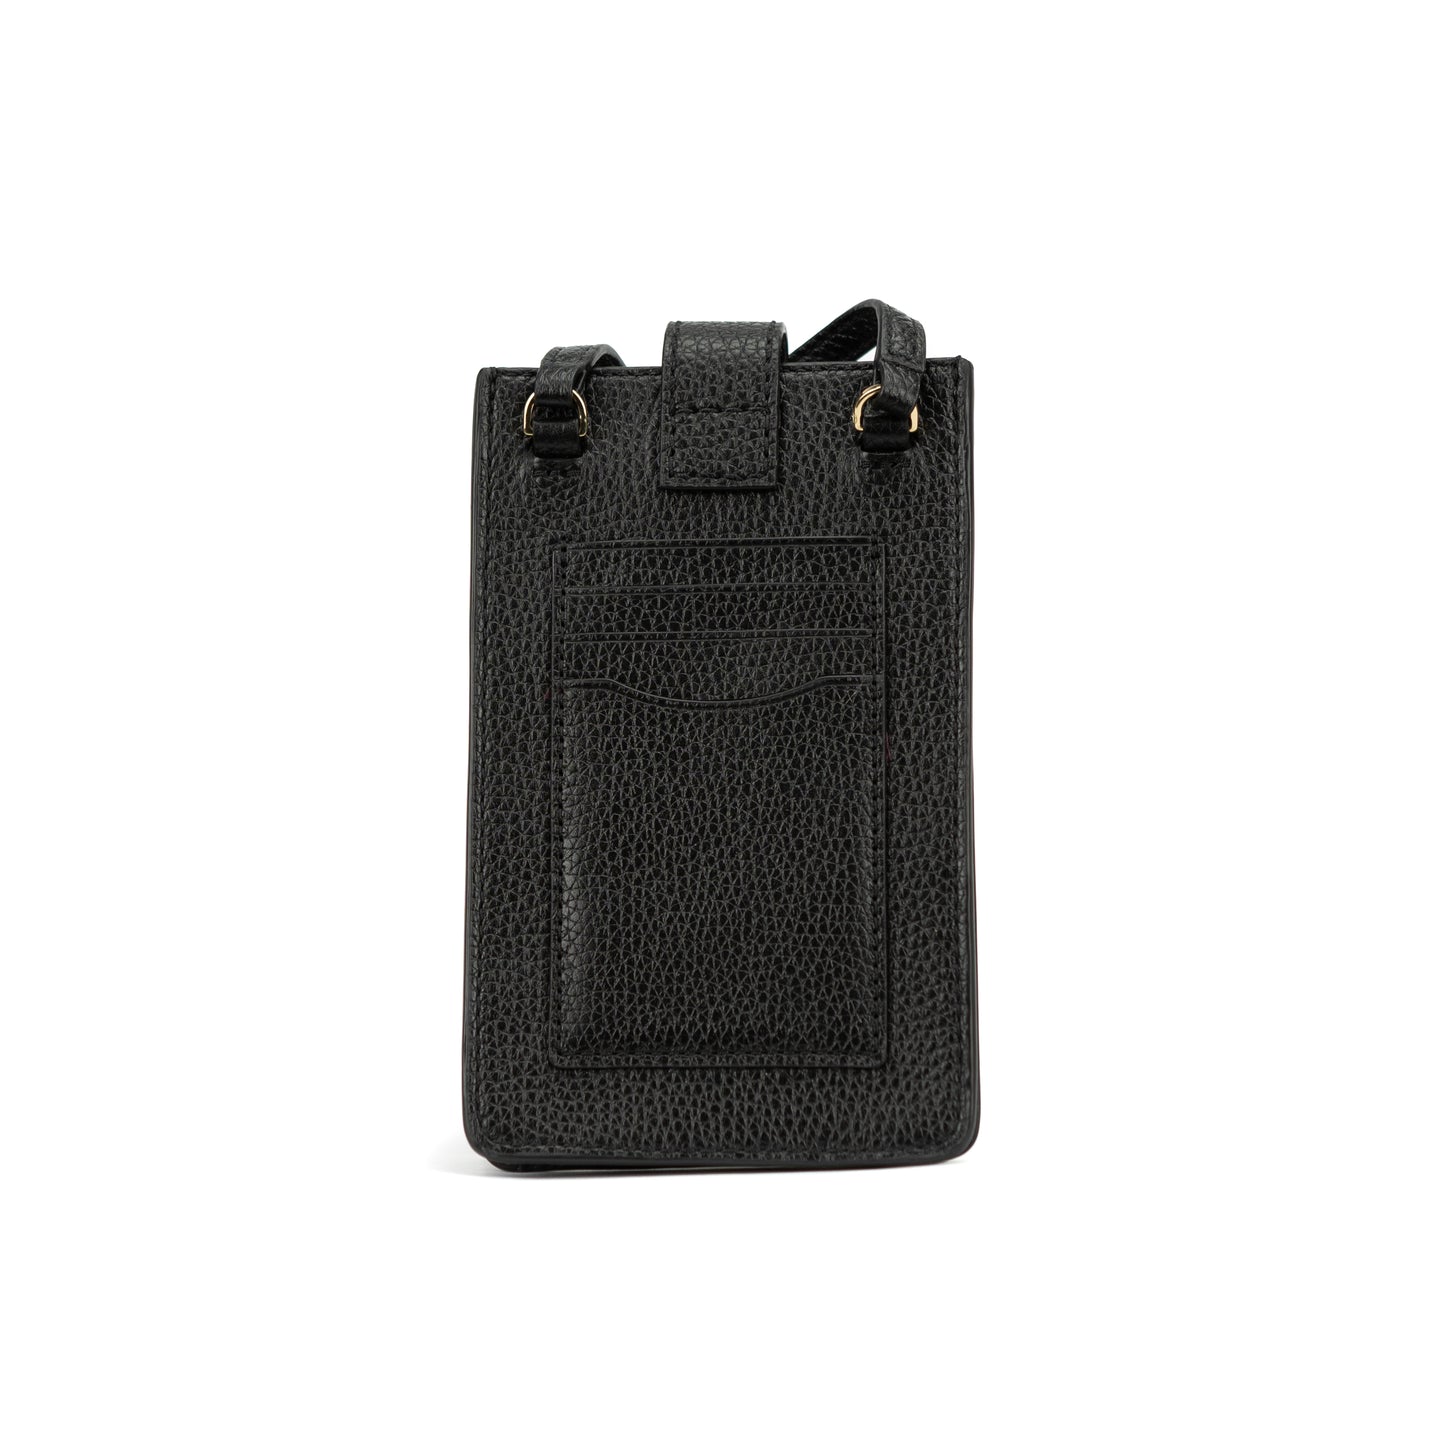 Marc Jacobs Groove Leather Phone Crossbody Bag - Black